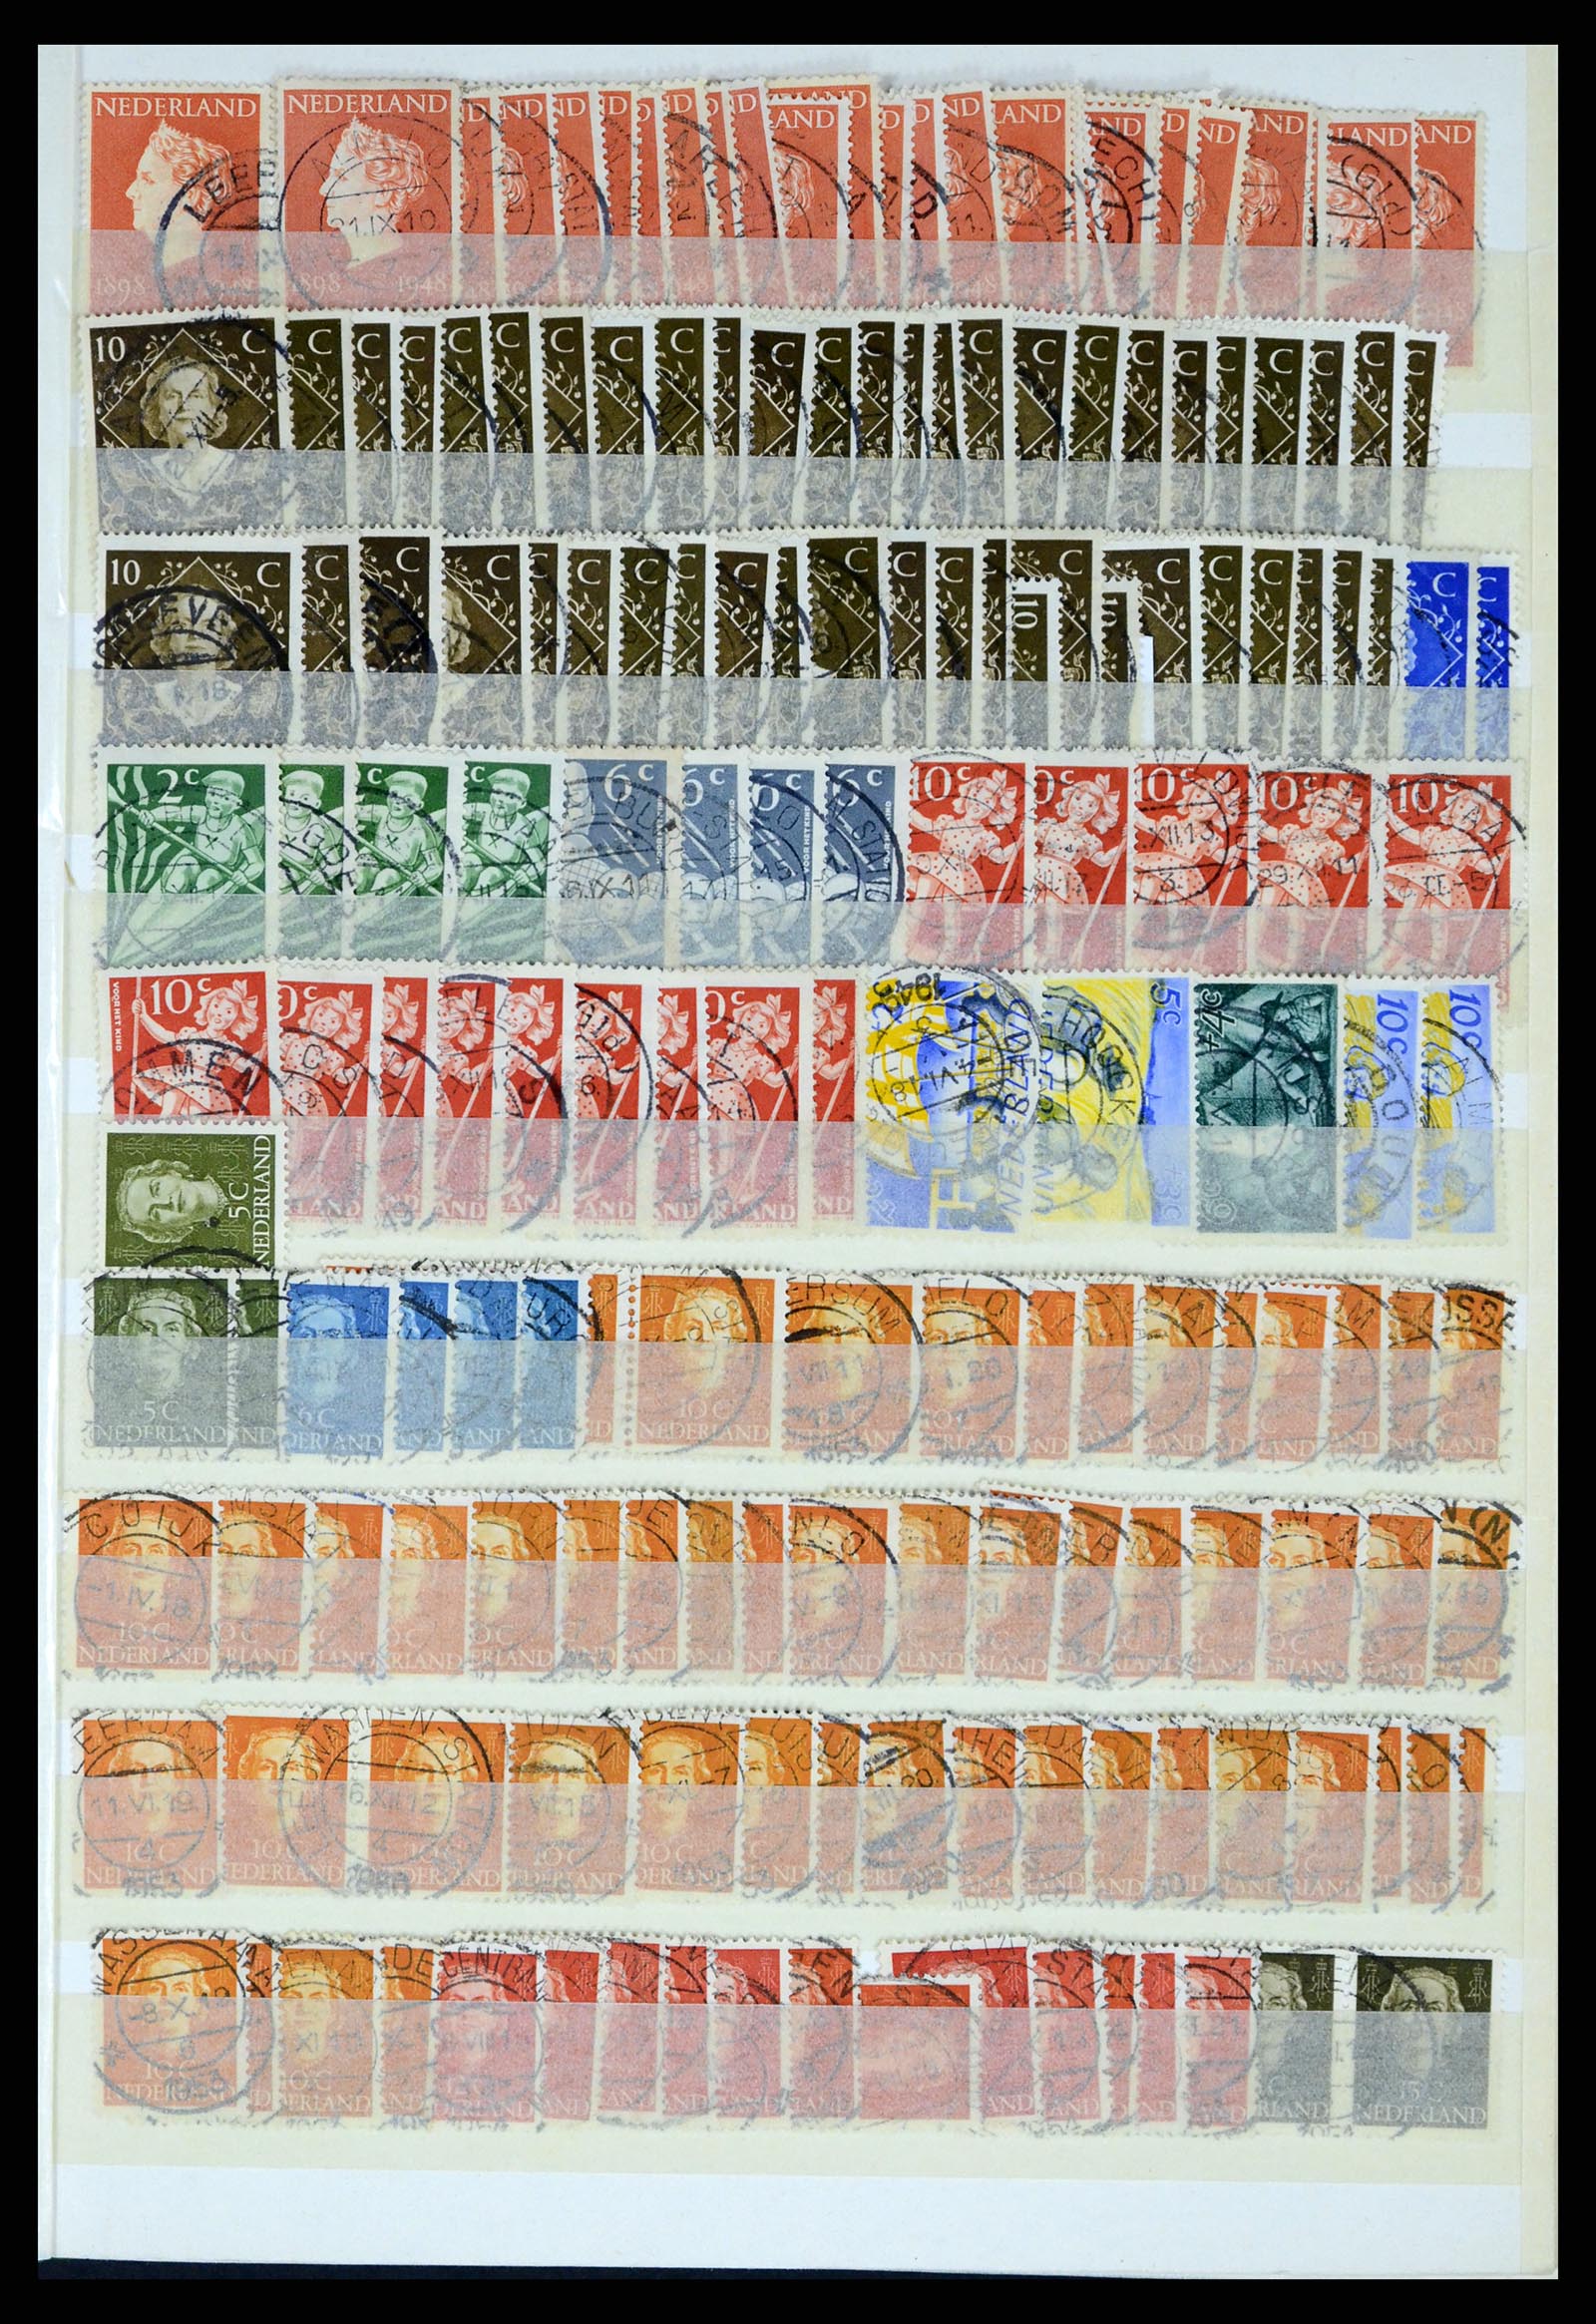 37424 045 - Stamp collection 37424 Netherlands shortbar cancels.